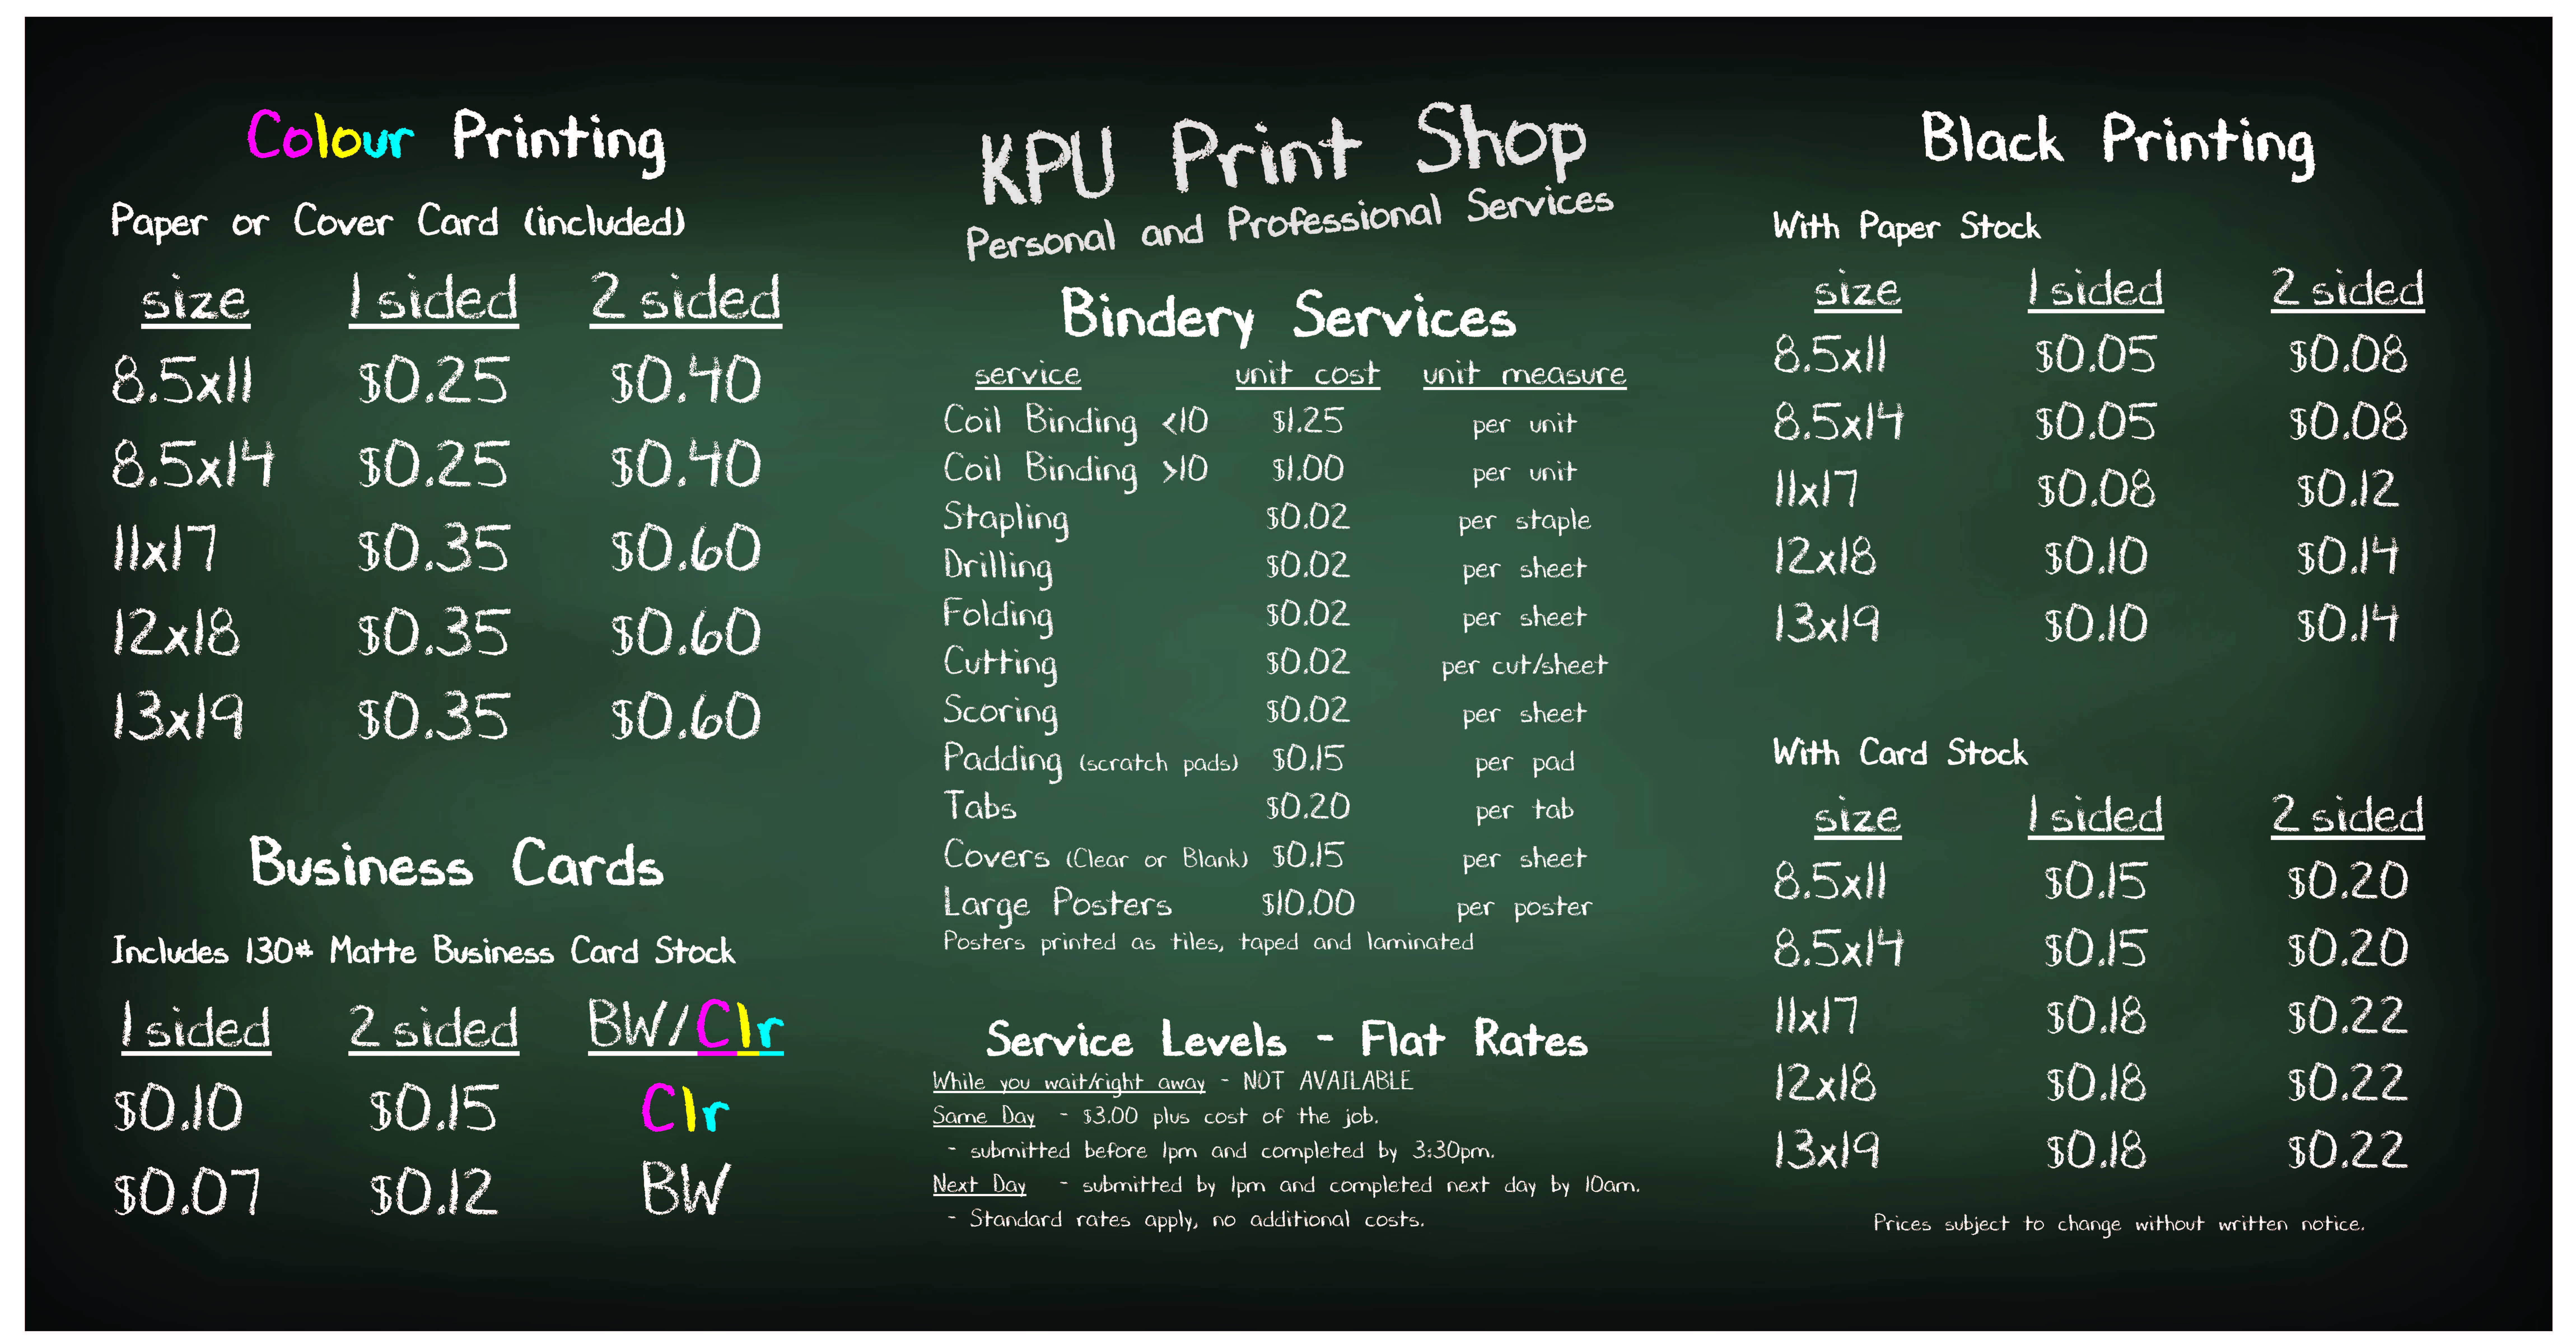 Print Shop Price List